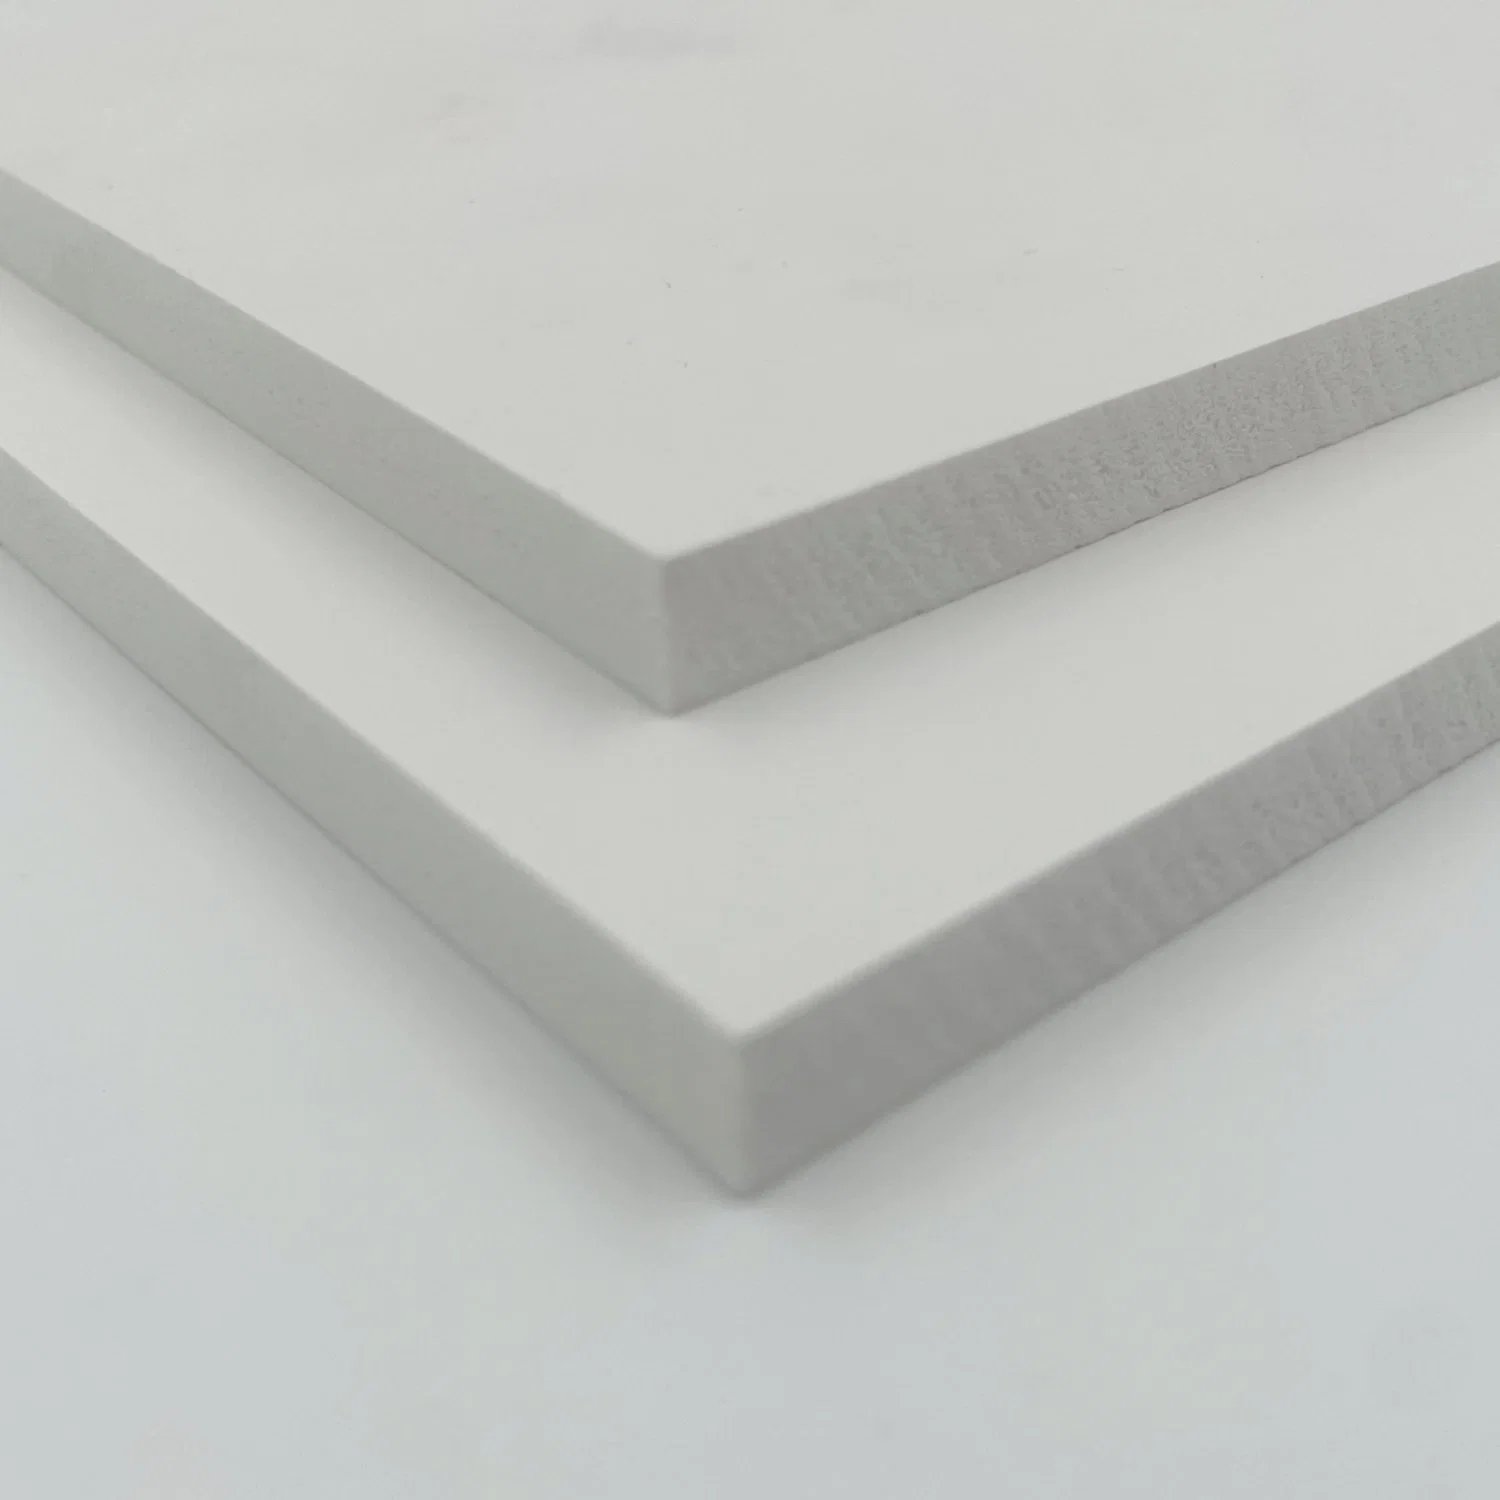 Lighte Weight Waterproof White Rigid PVC Panel Board PVC Foam Sheet for Construction